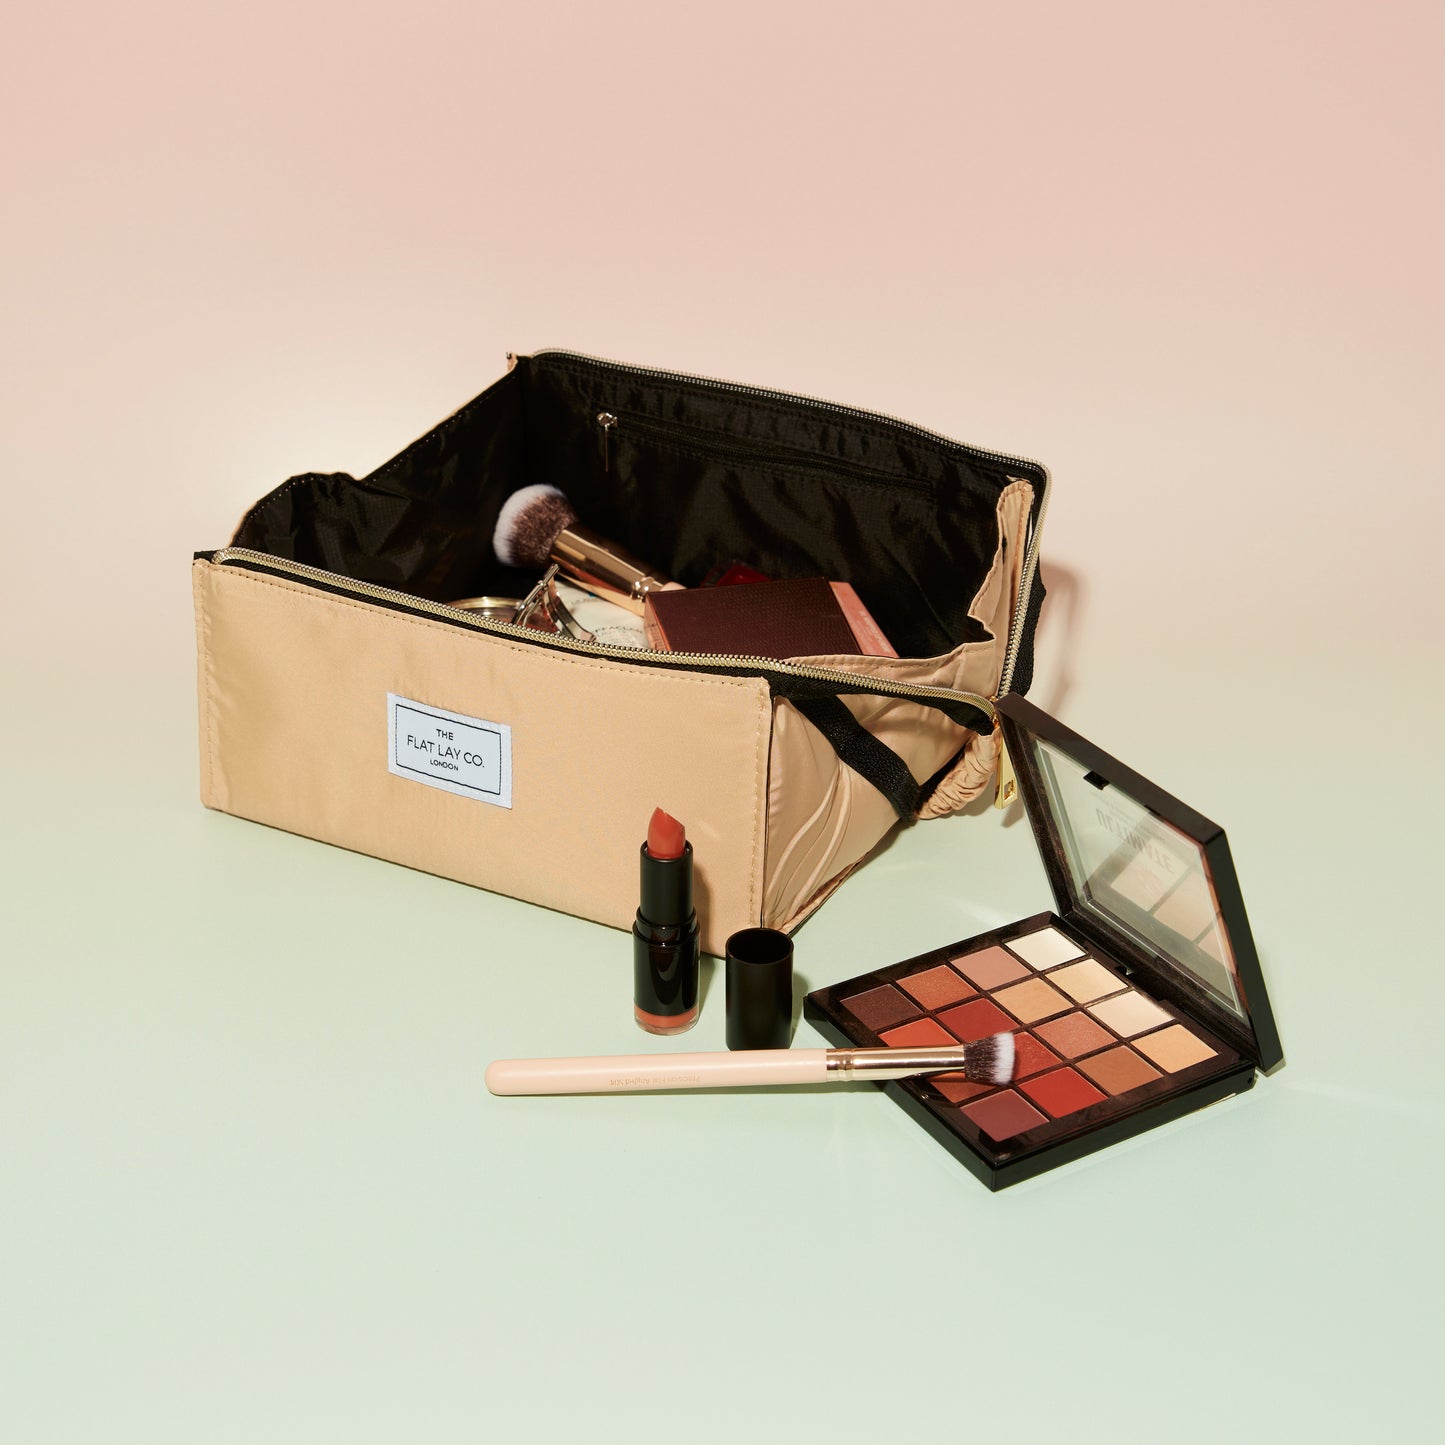 Clay Open Flat Makeup Box Bag and Tray